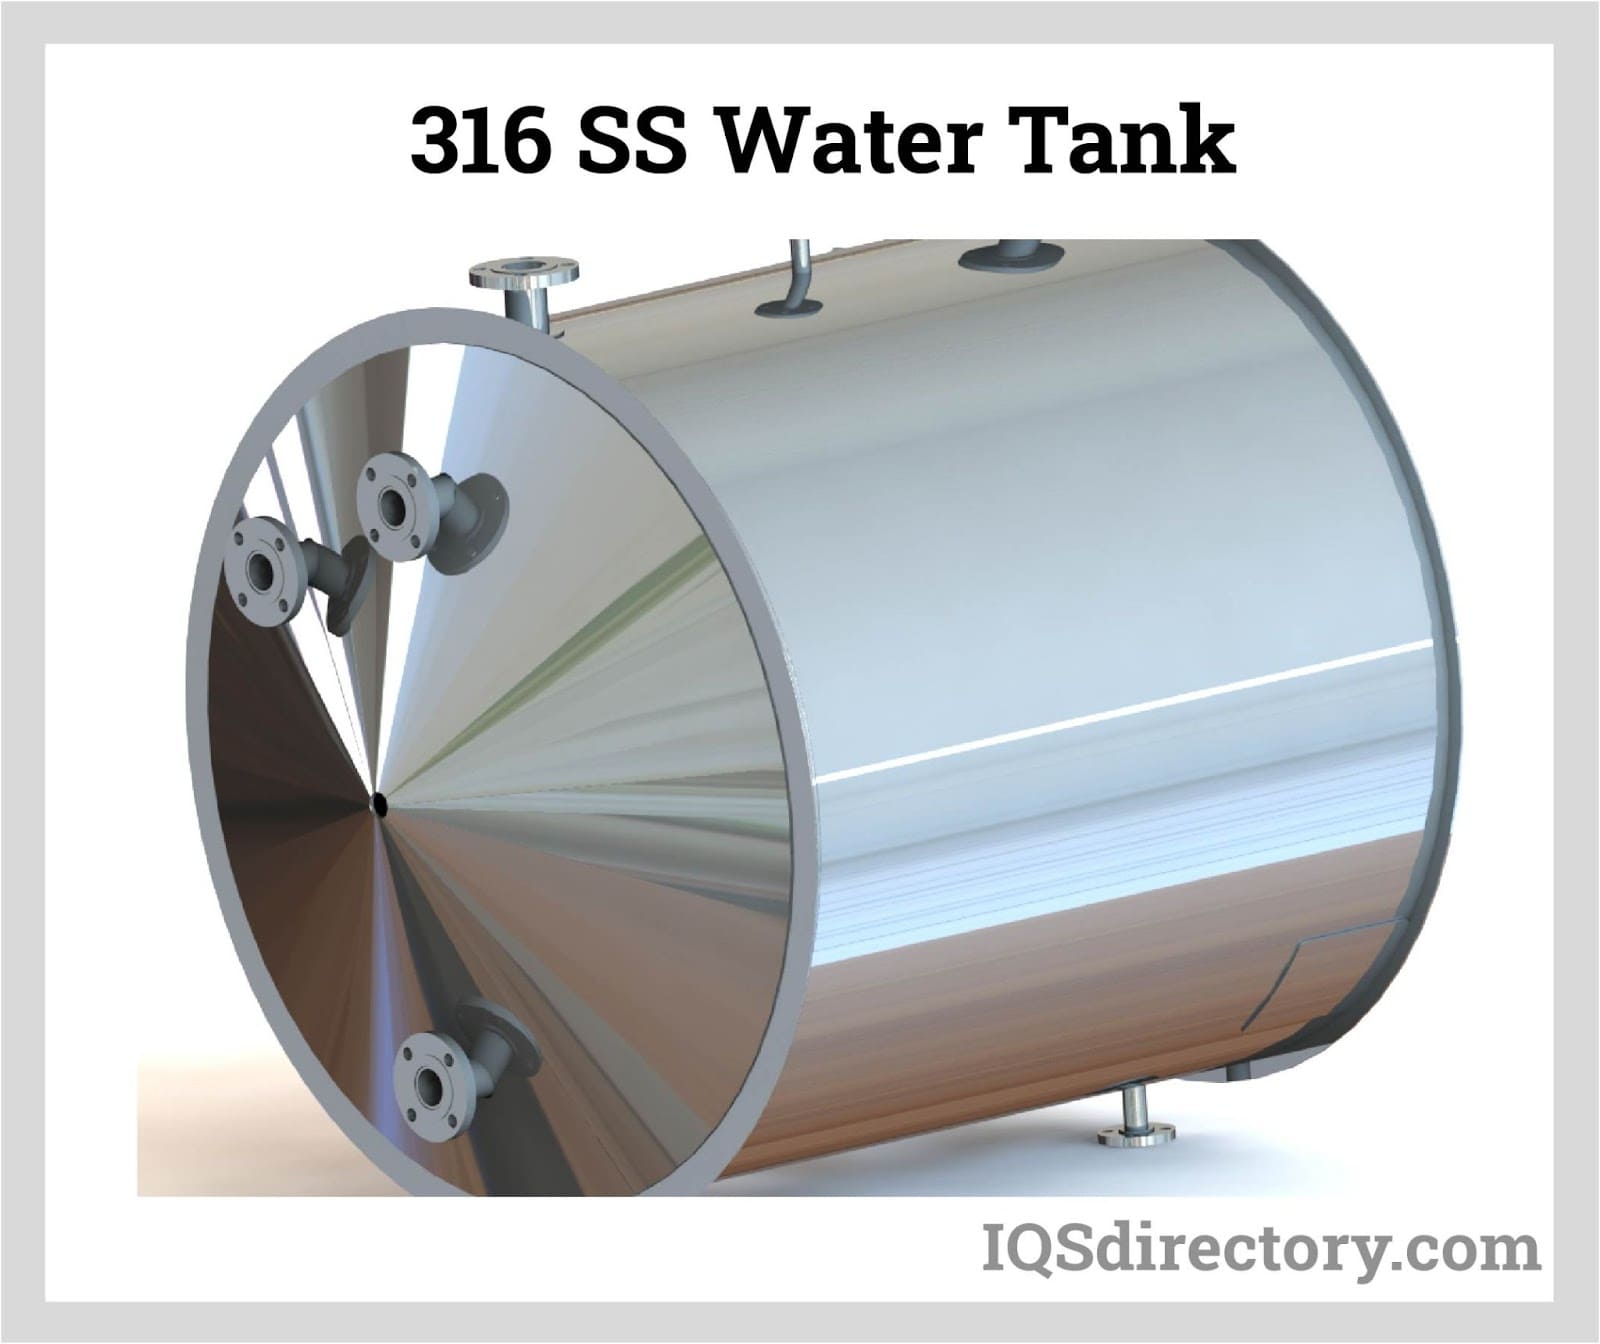 316 ss water tank